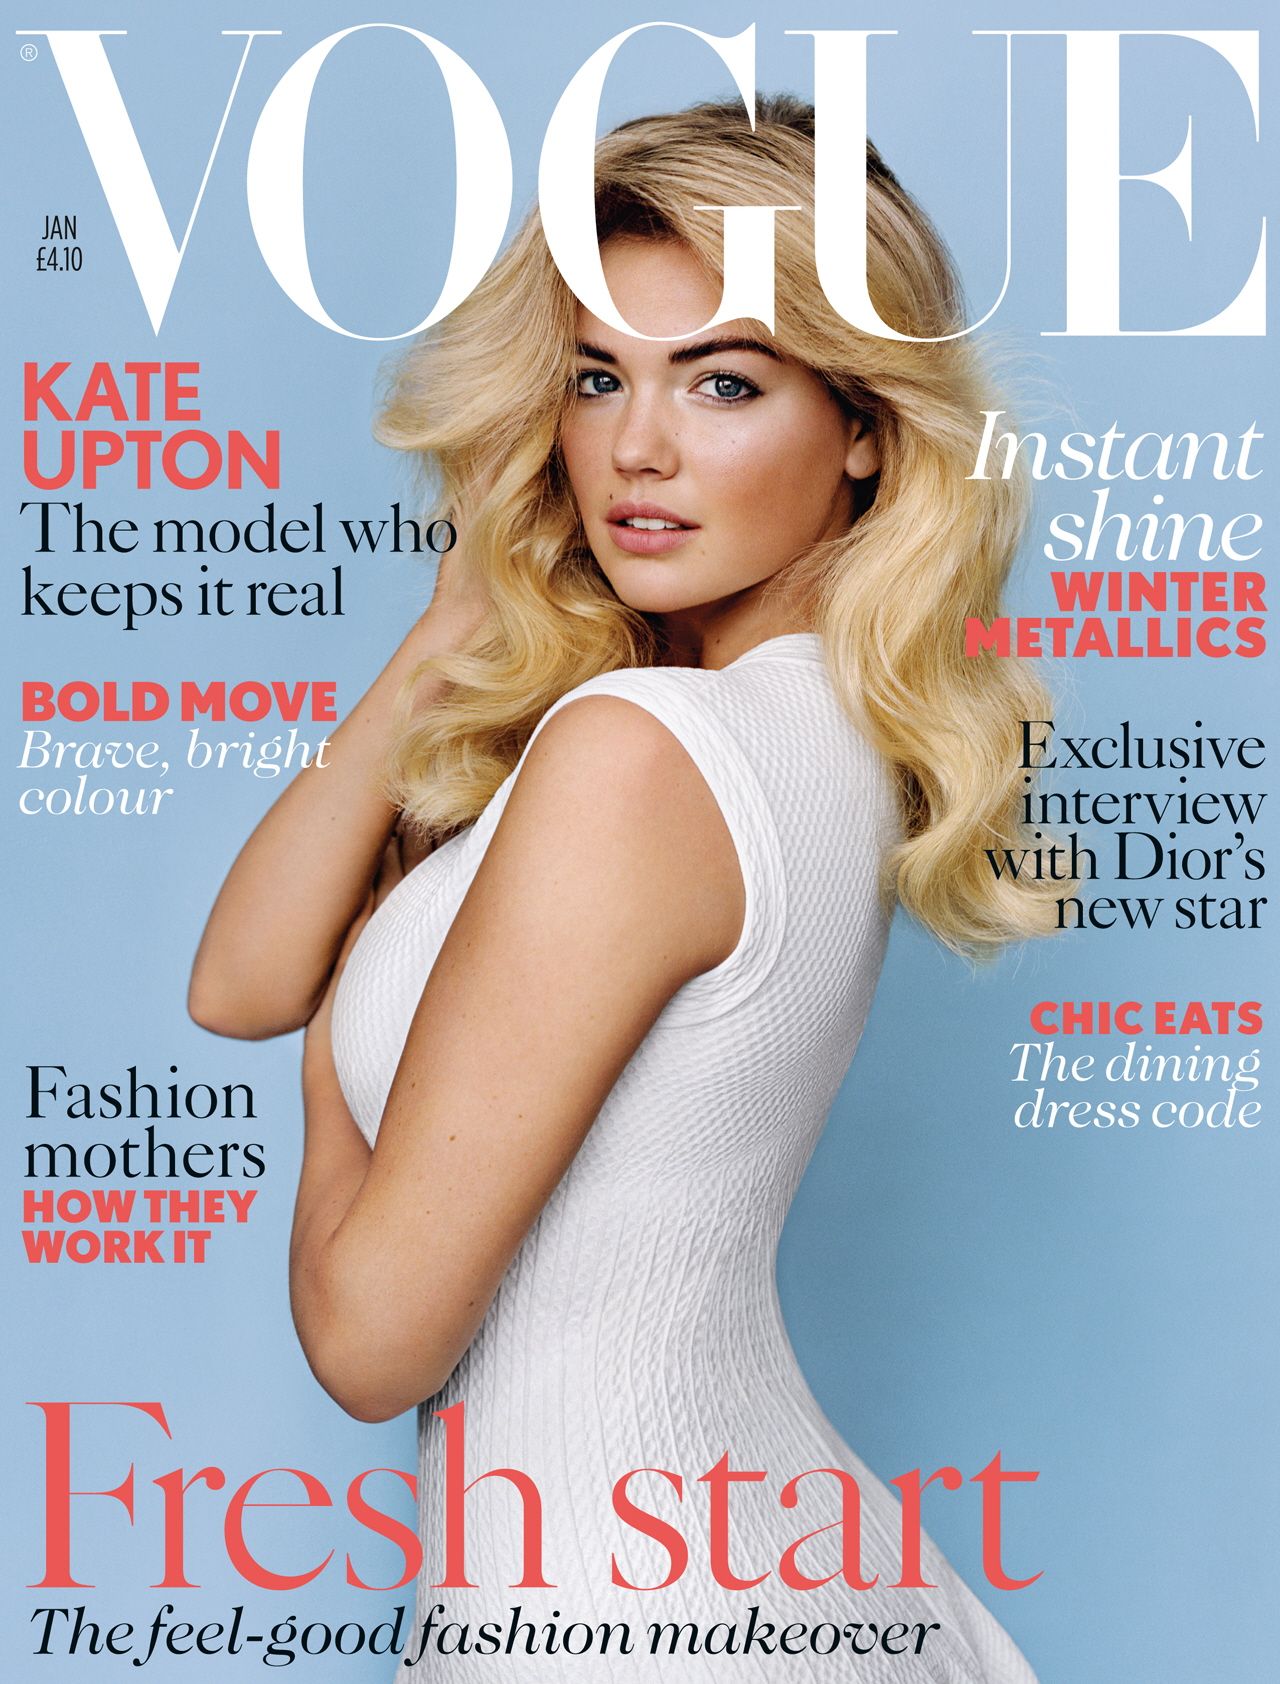 Kate Upton in Vogue UK - January 2013